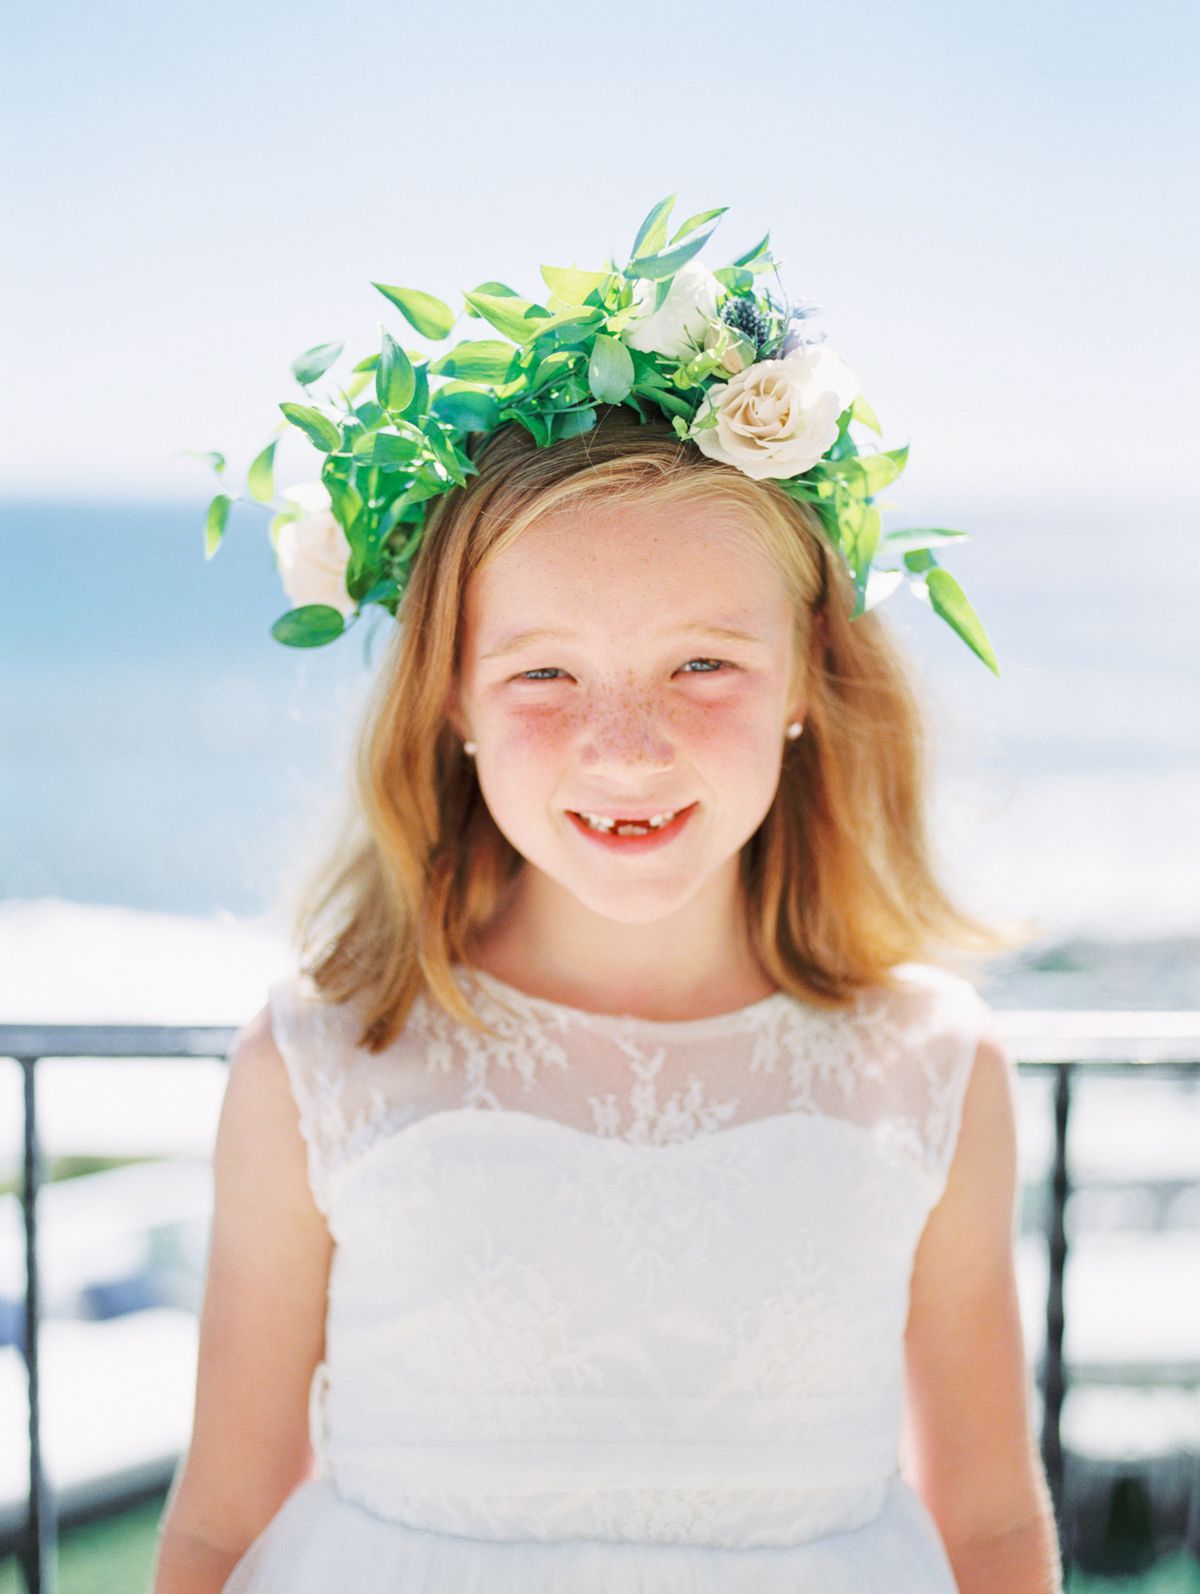 bettina gino wedding flower girl in white with hair wreath